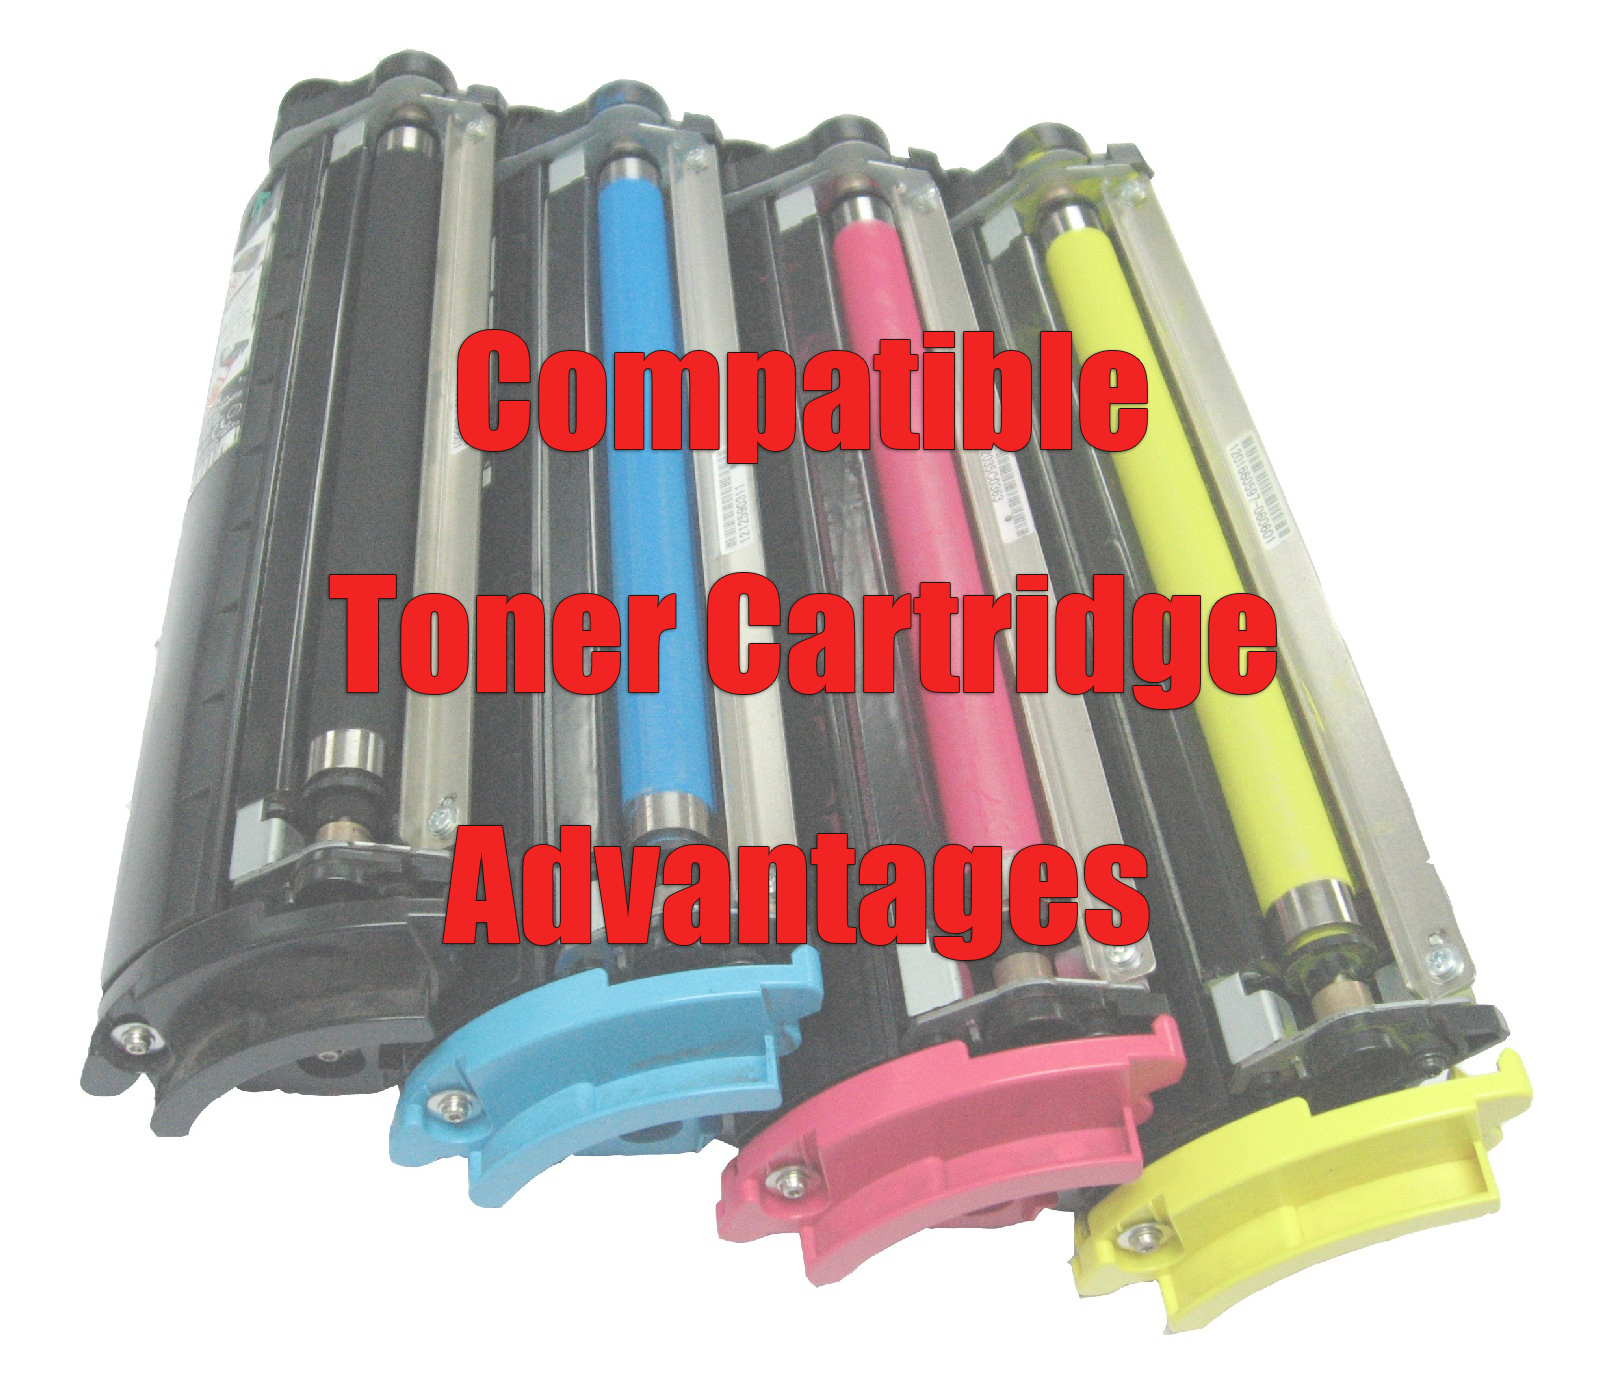 Compatible Toner Cartridge Advantages